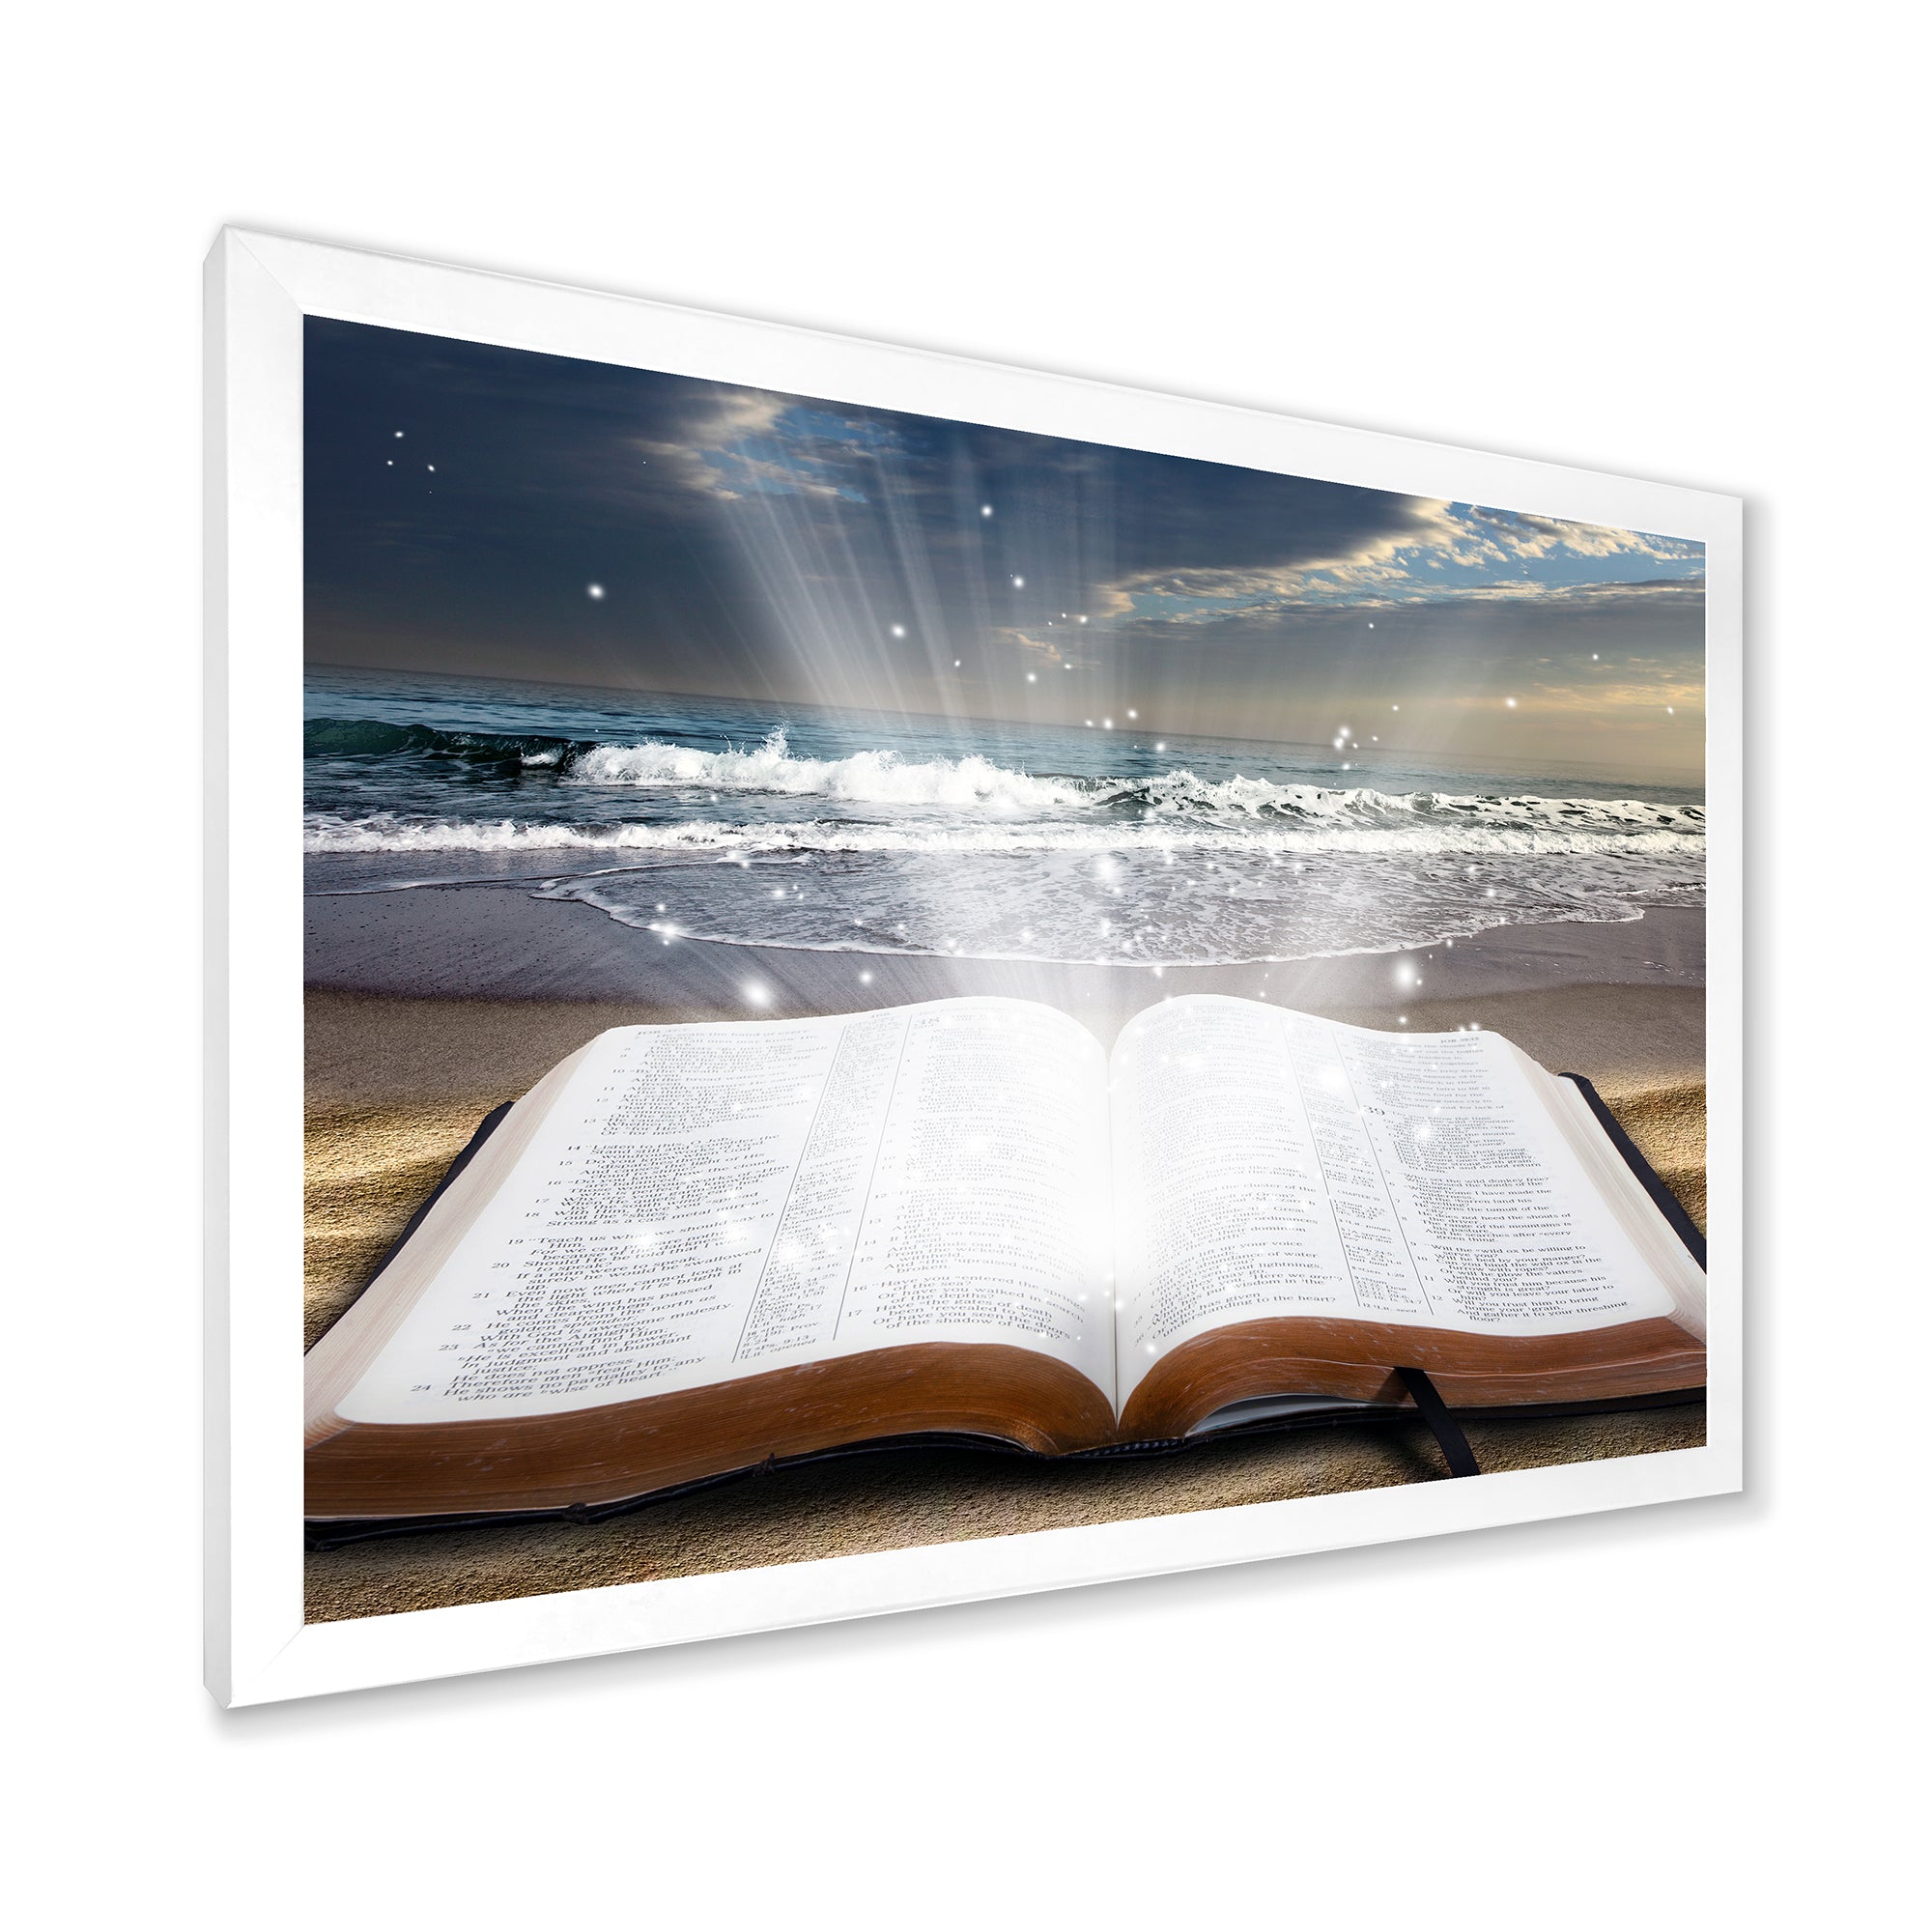 Jesus Bible at beach